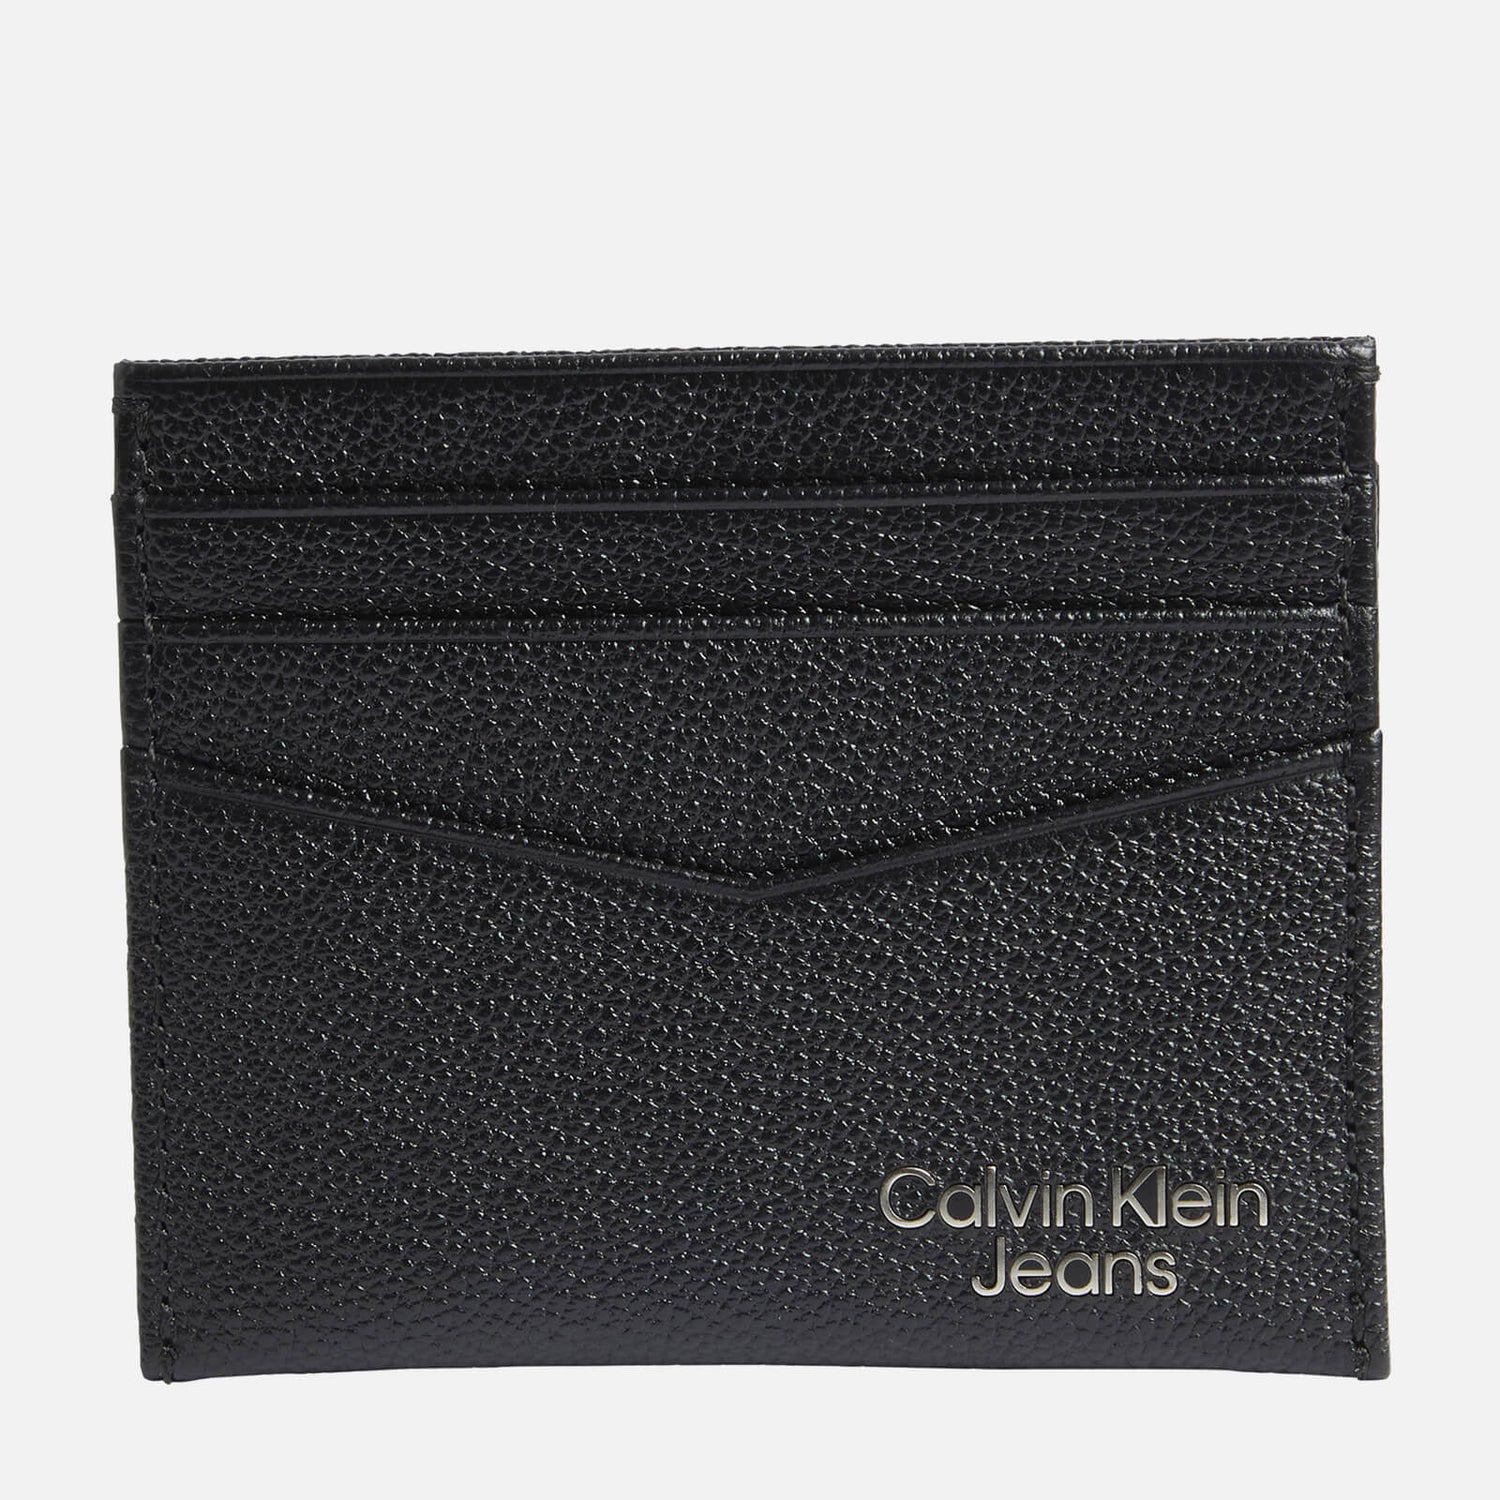 Calvin Klein Jeans Men's Micro Pebble Id Cardholder - Black